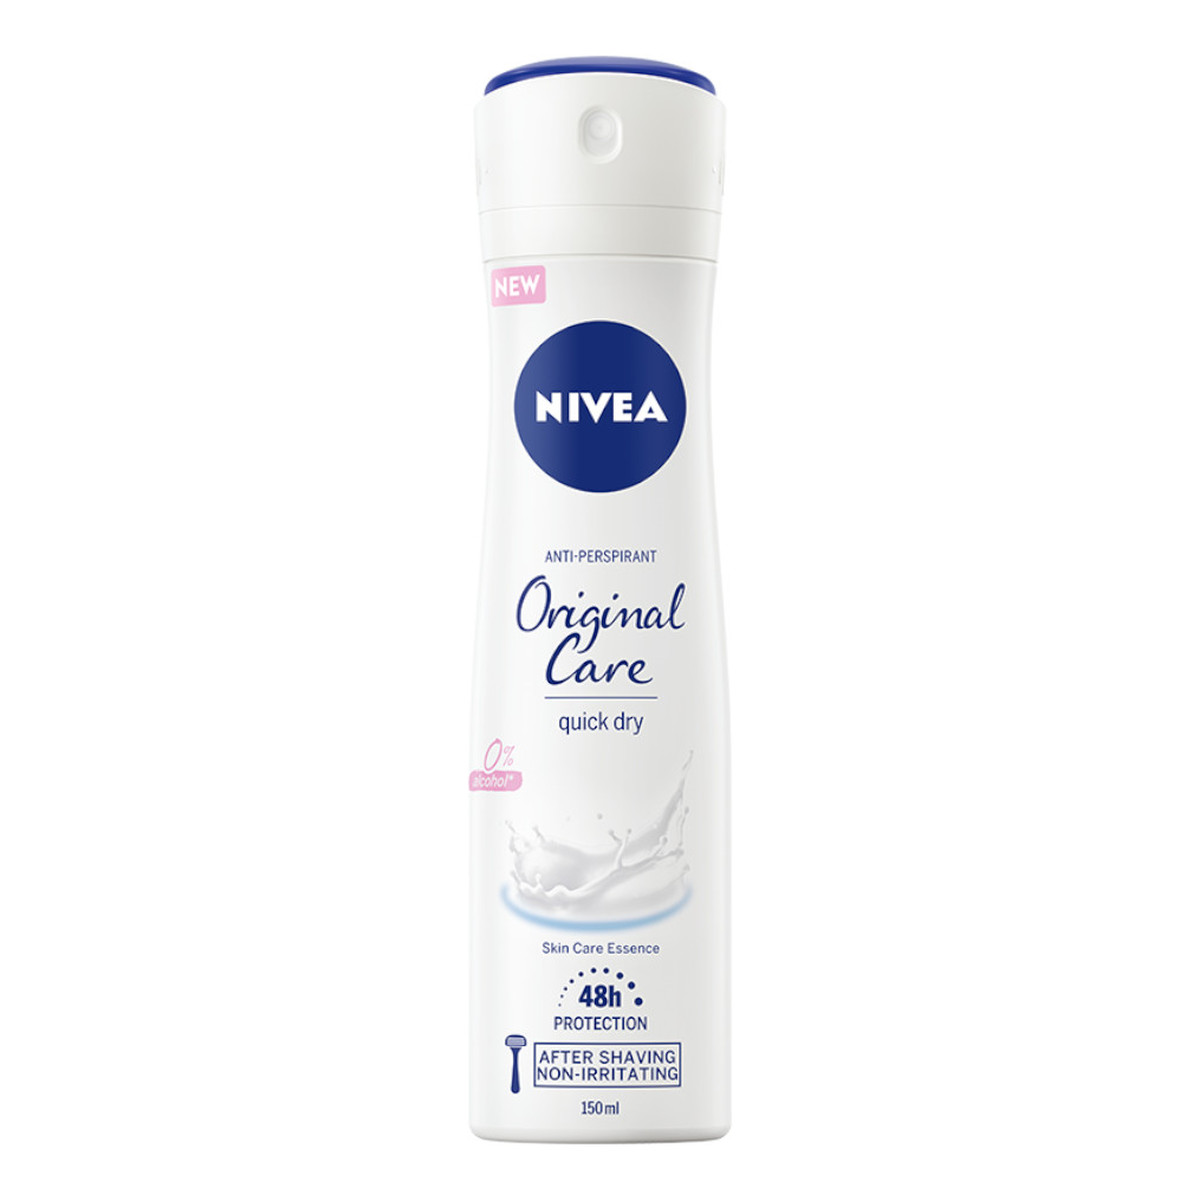 Nivea Original Care Antyperspirant spray 150ml